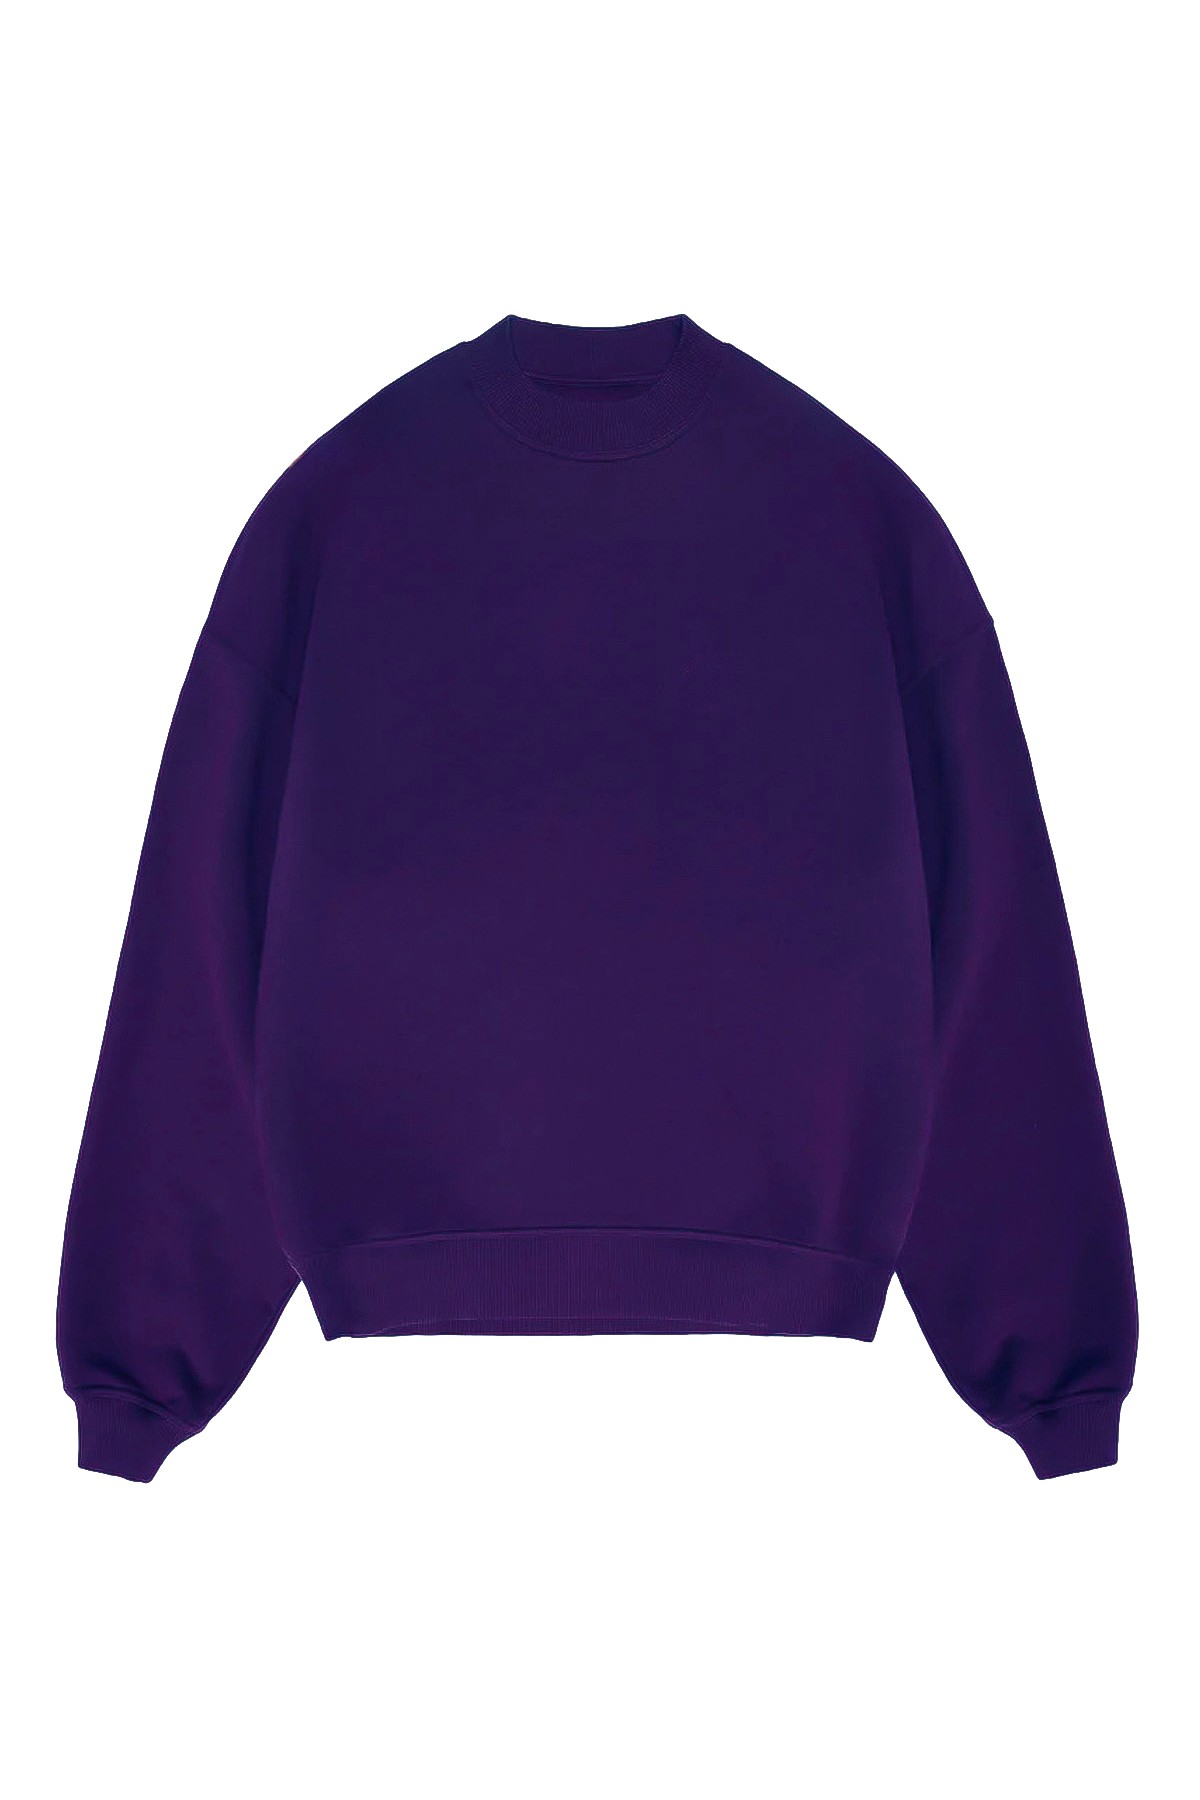 Jeu - Oversize Sweatshirt - PURPLE